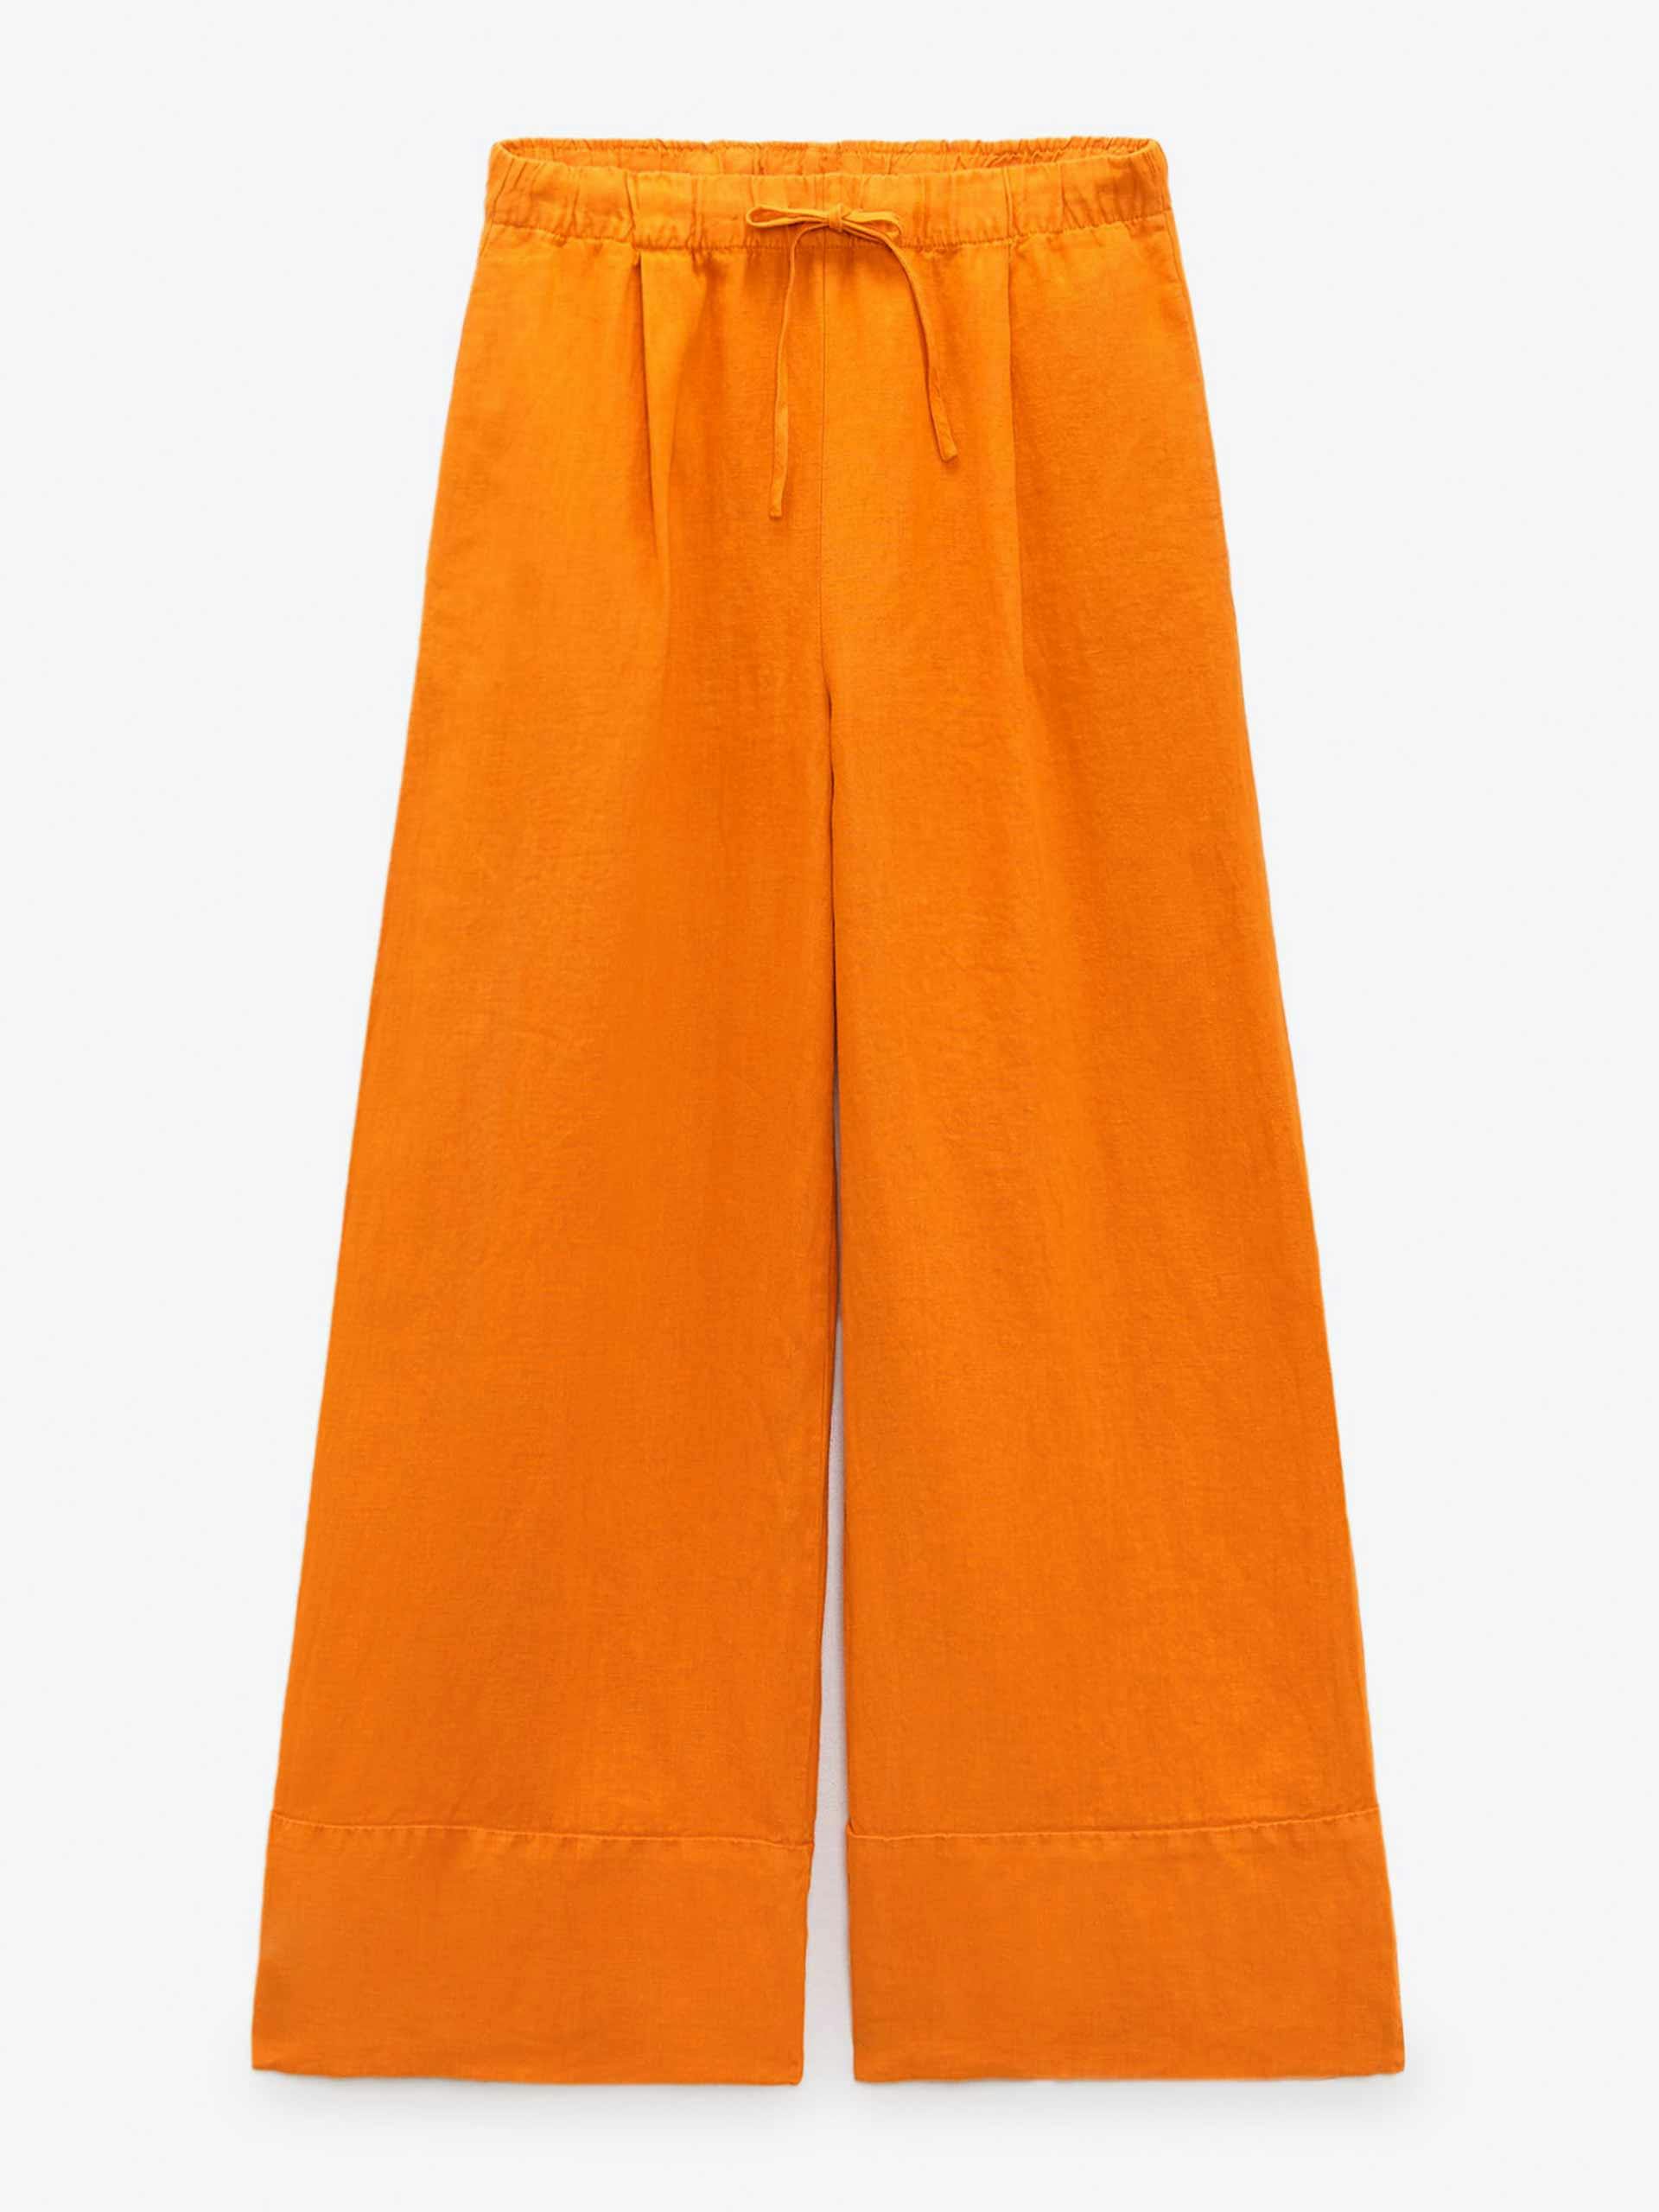 Orange linen trousers